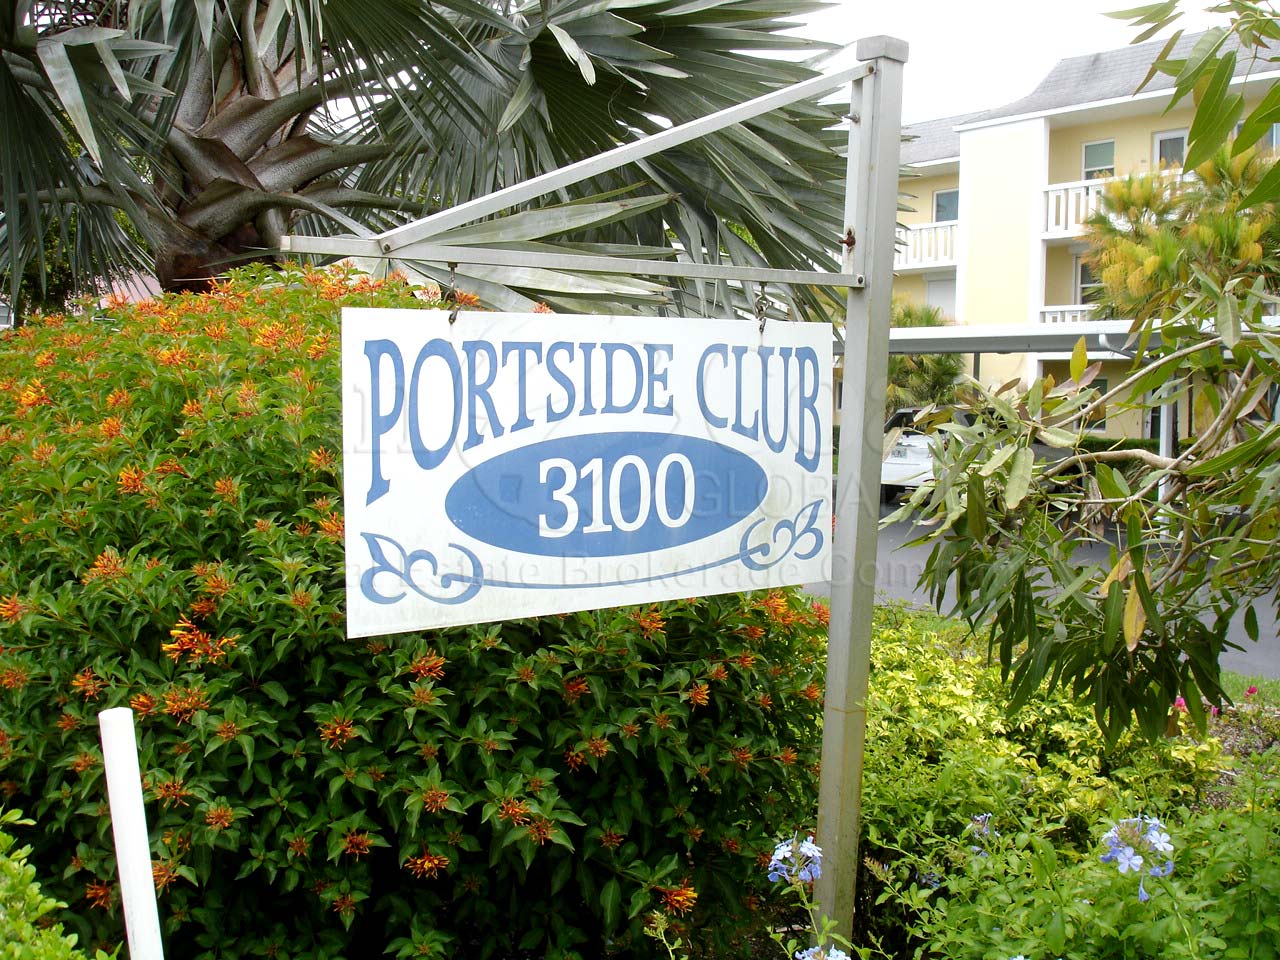 Portside Club Signage